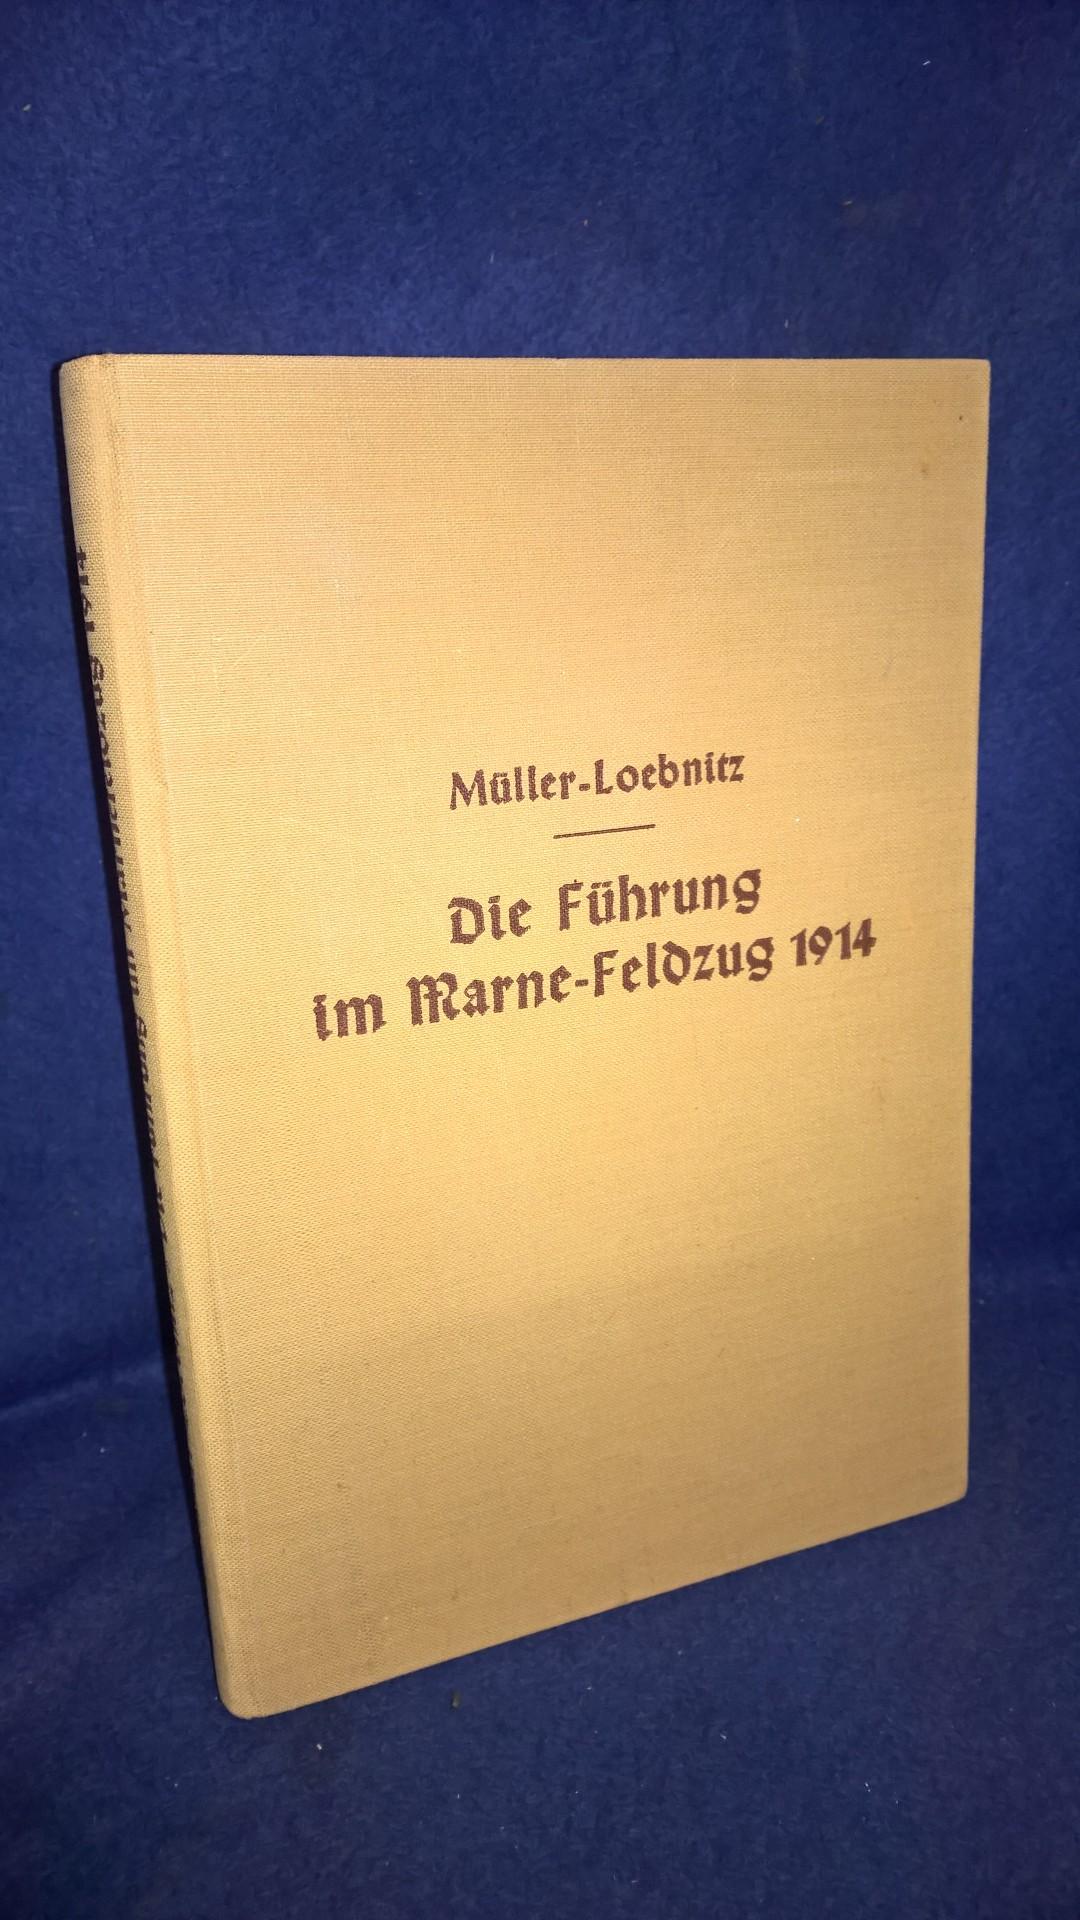 Die Führung im Marne-Feldzug 1914.